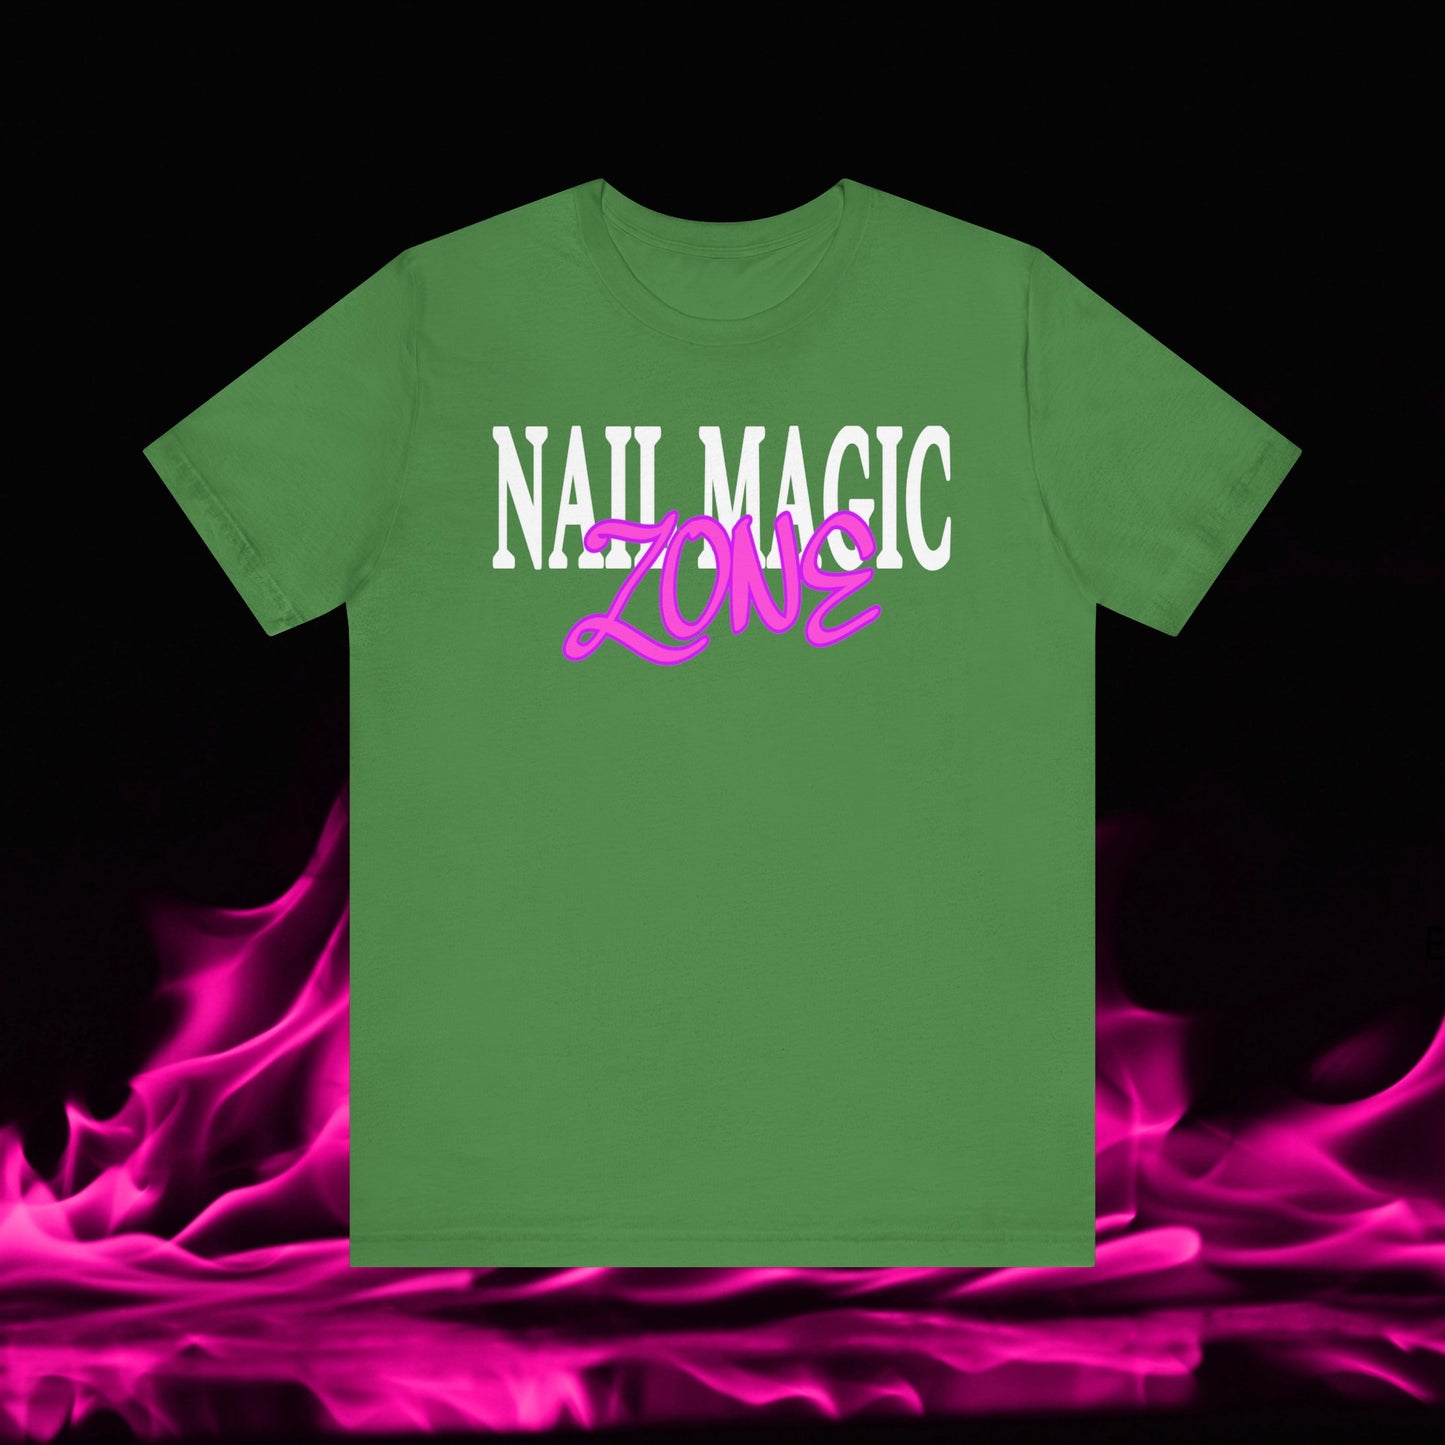 Nail Magic Zone T-Shirt